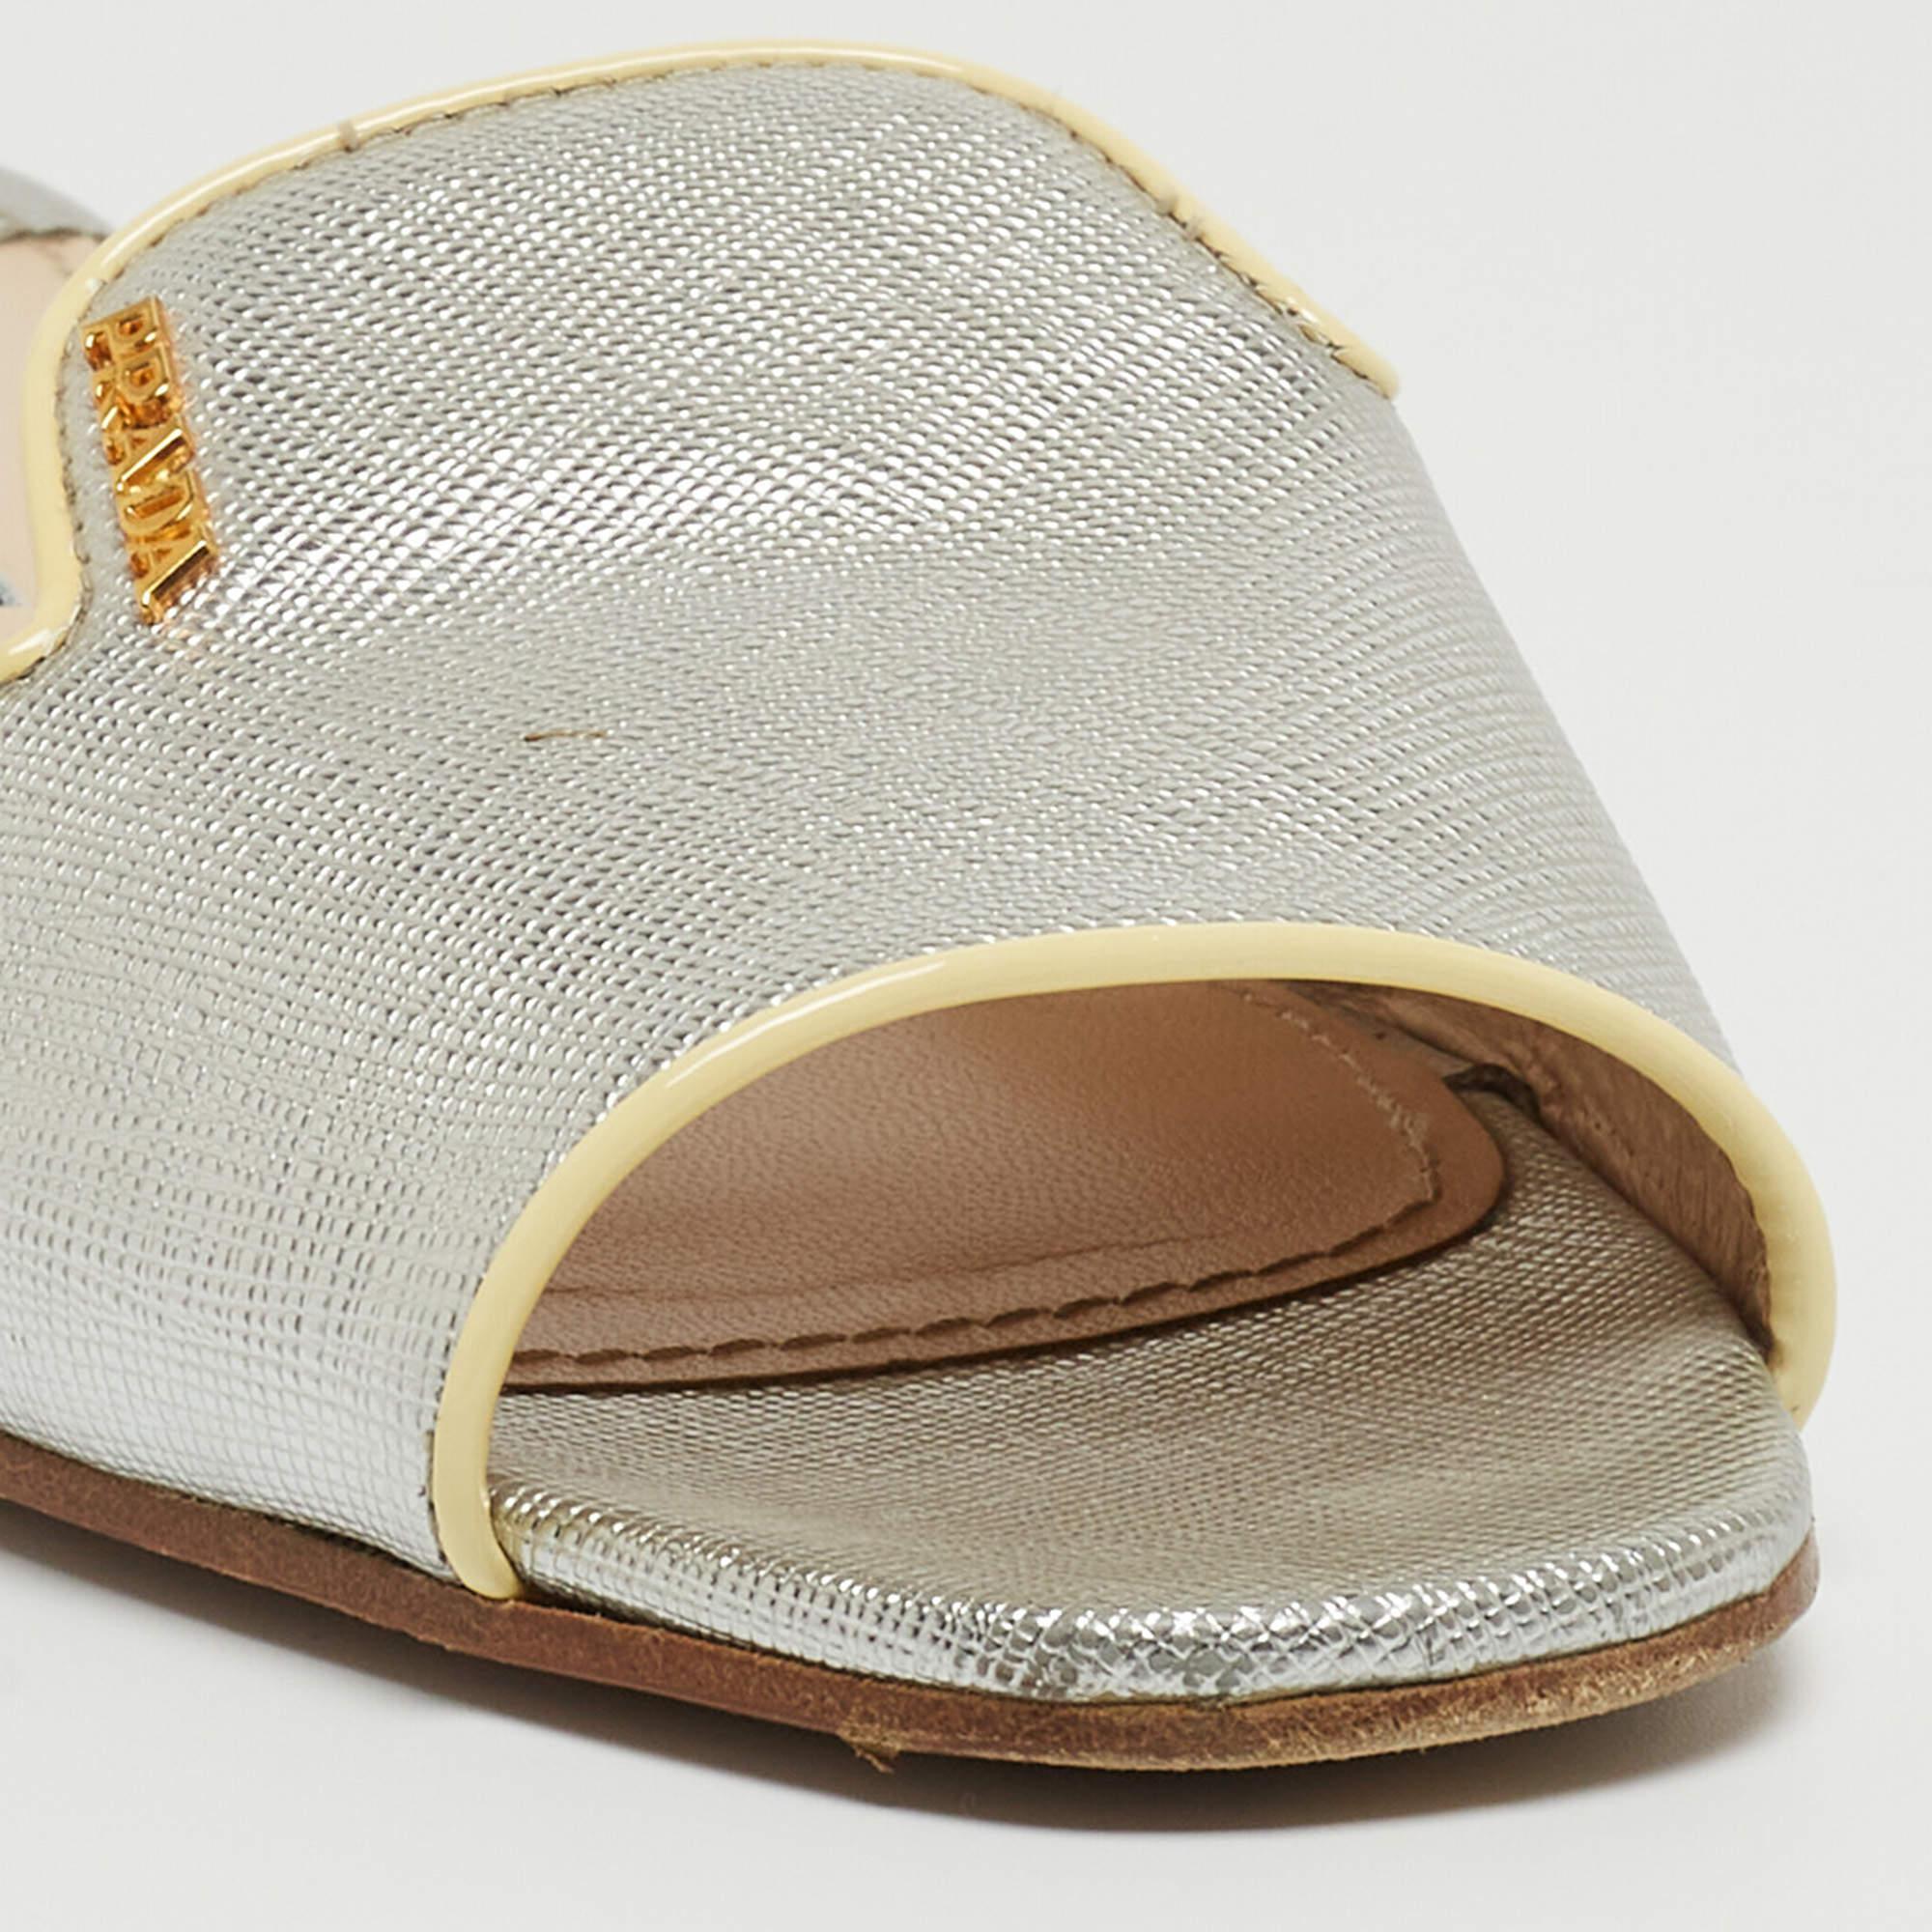 Prada Silver Saffiano Leather Flat Slides Size 37.5 3